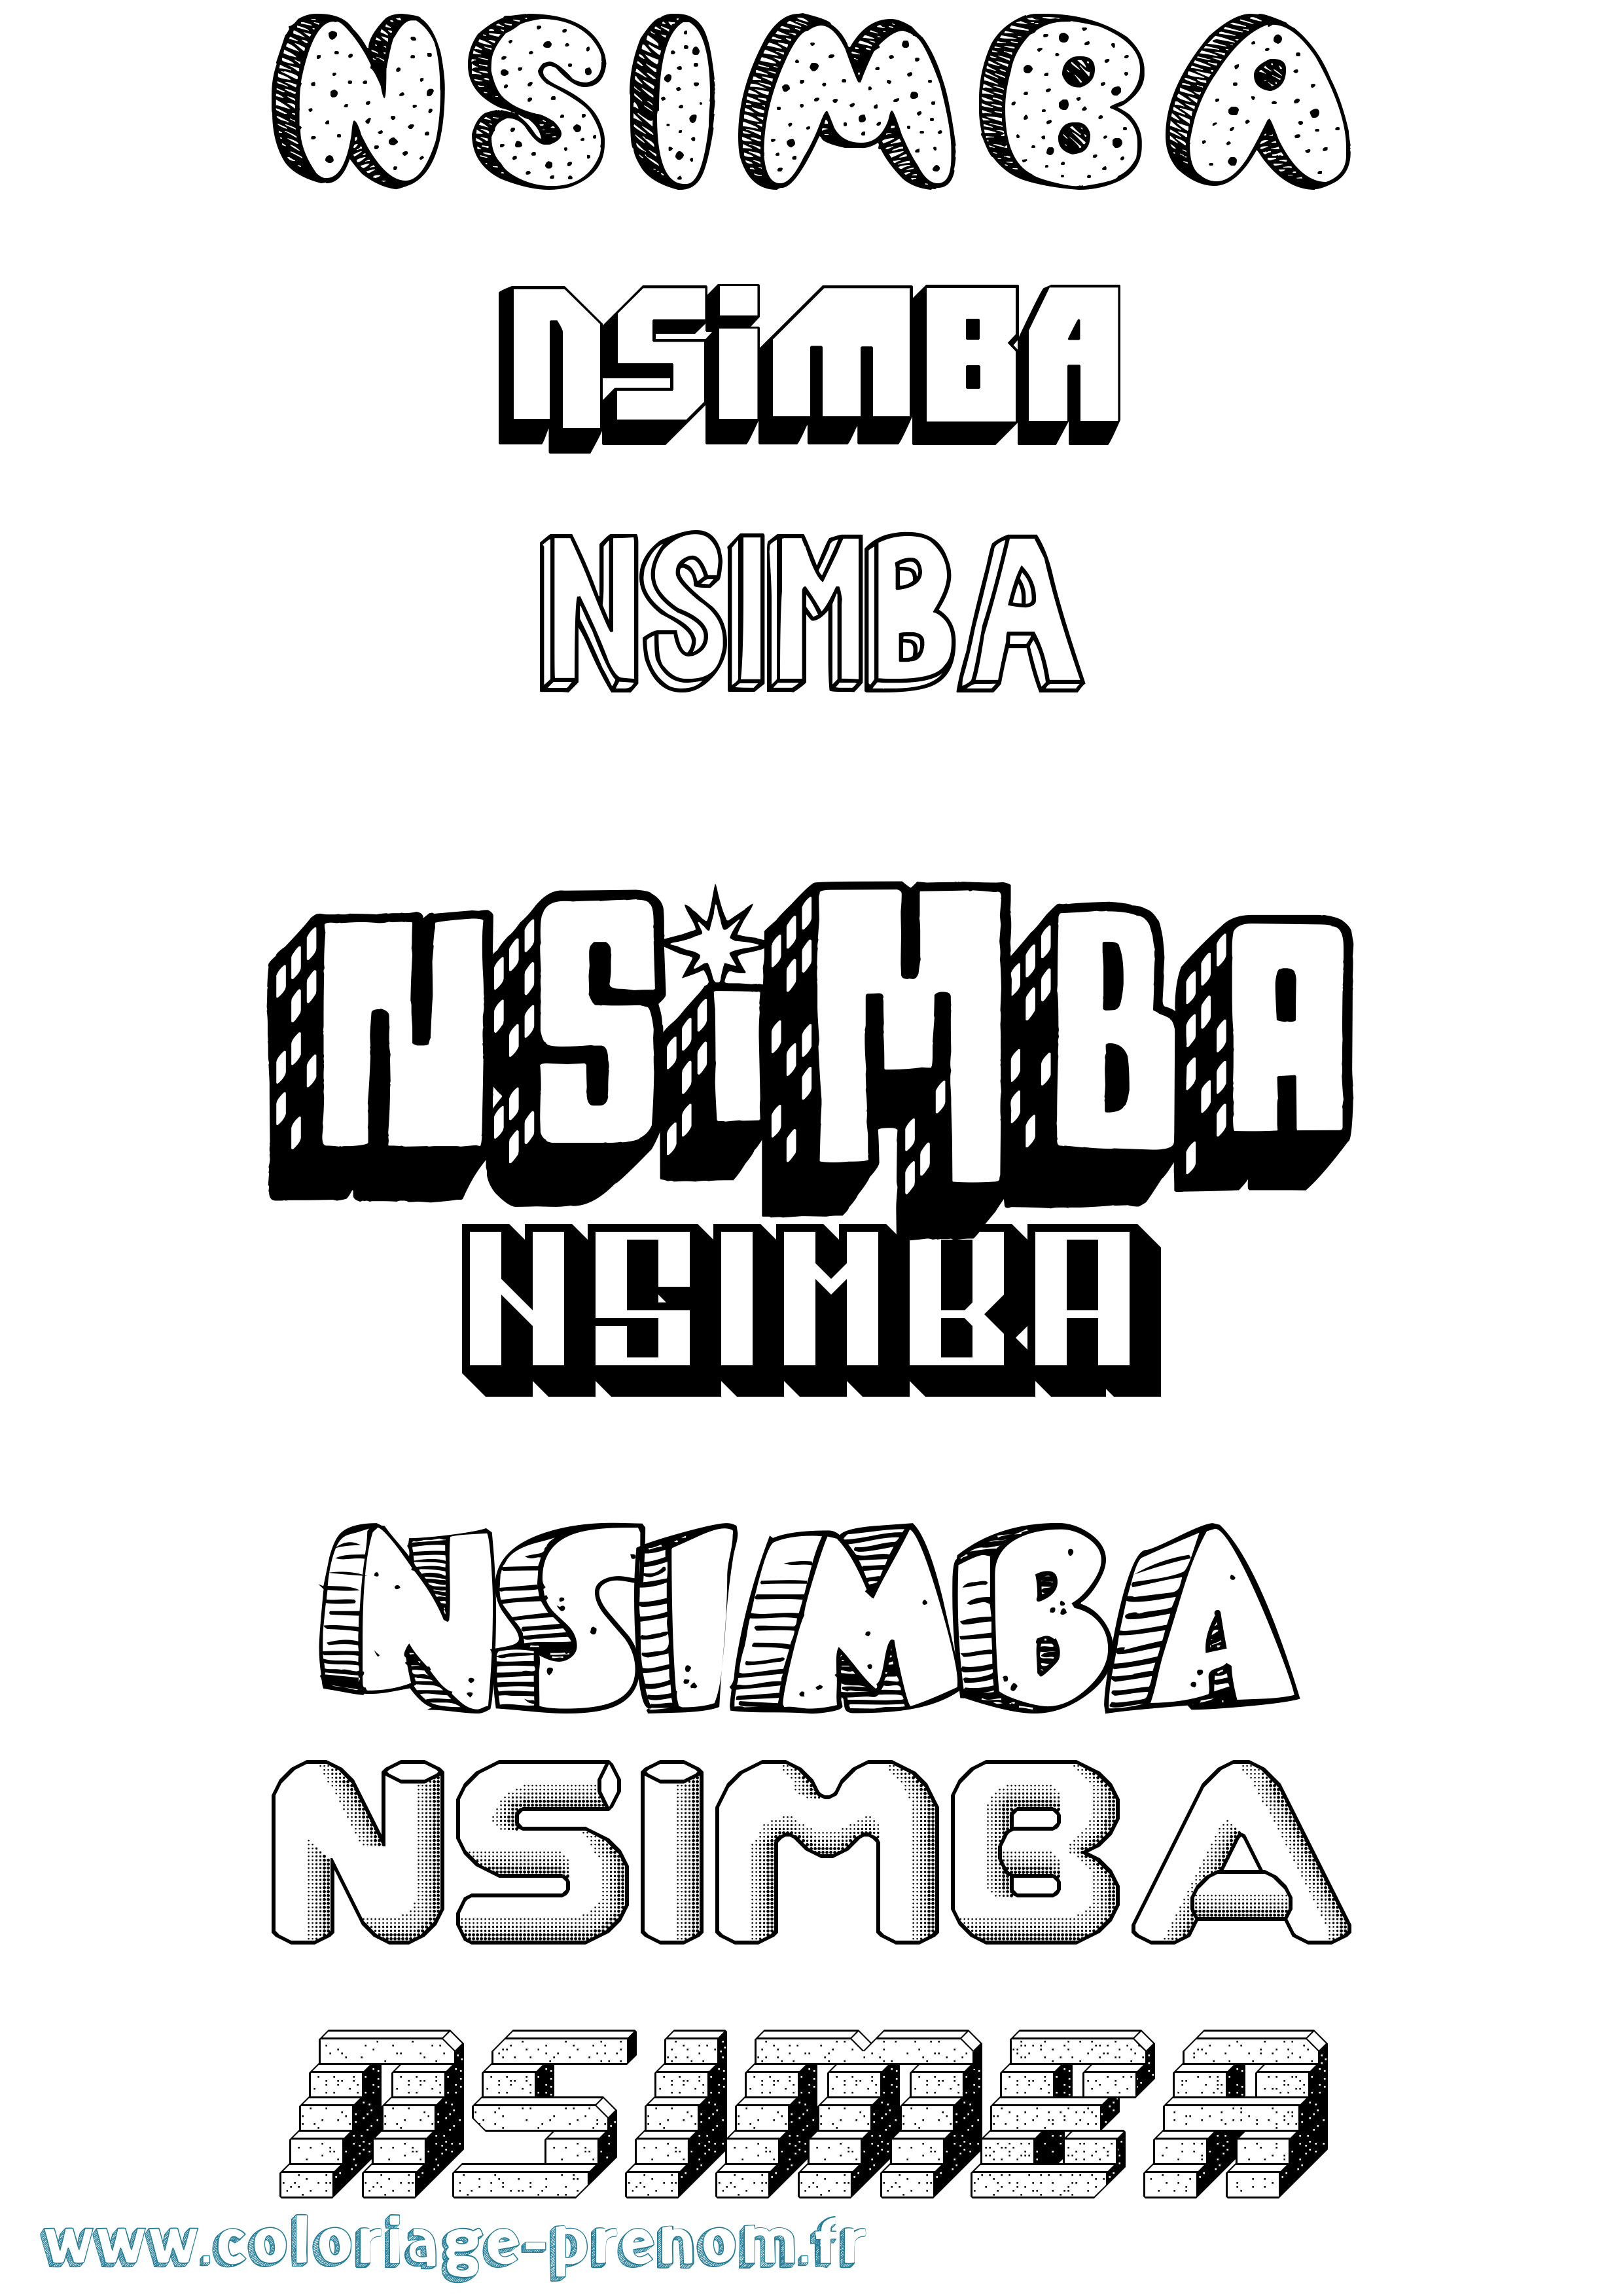 Coloriage prénom Nsimba Effet 3D